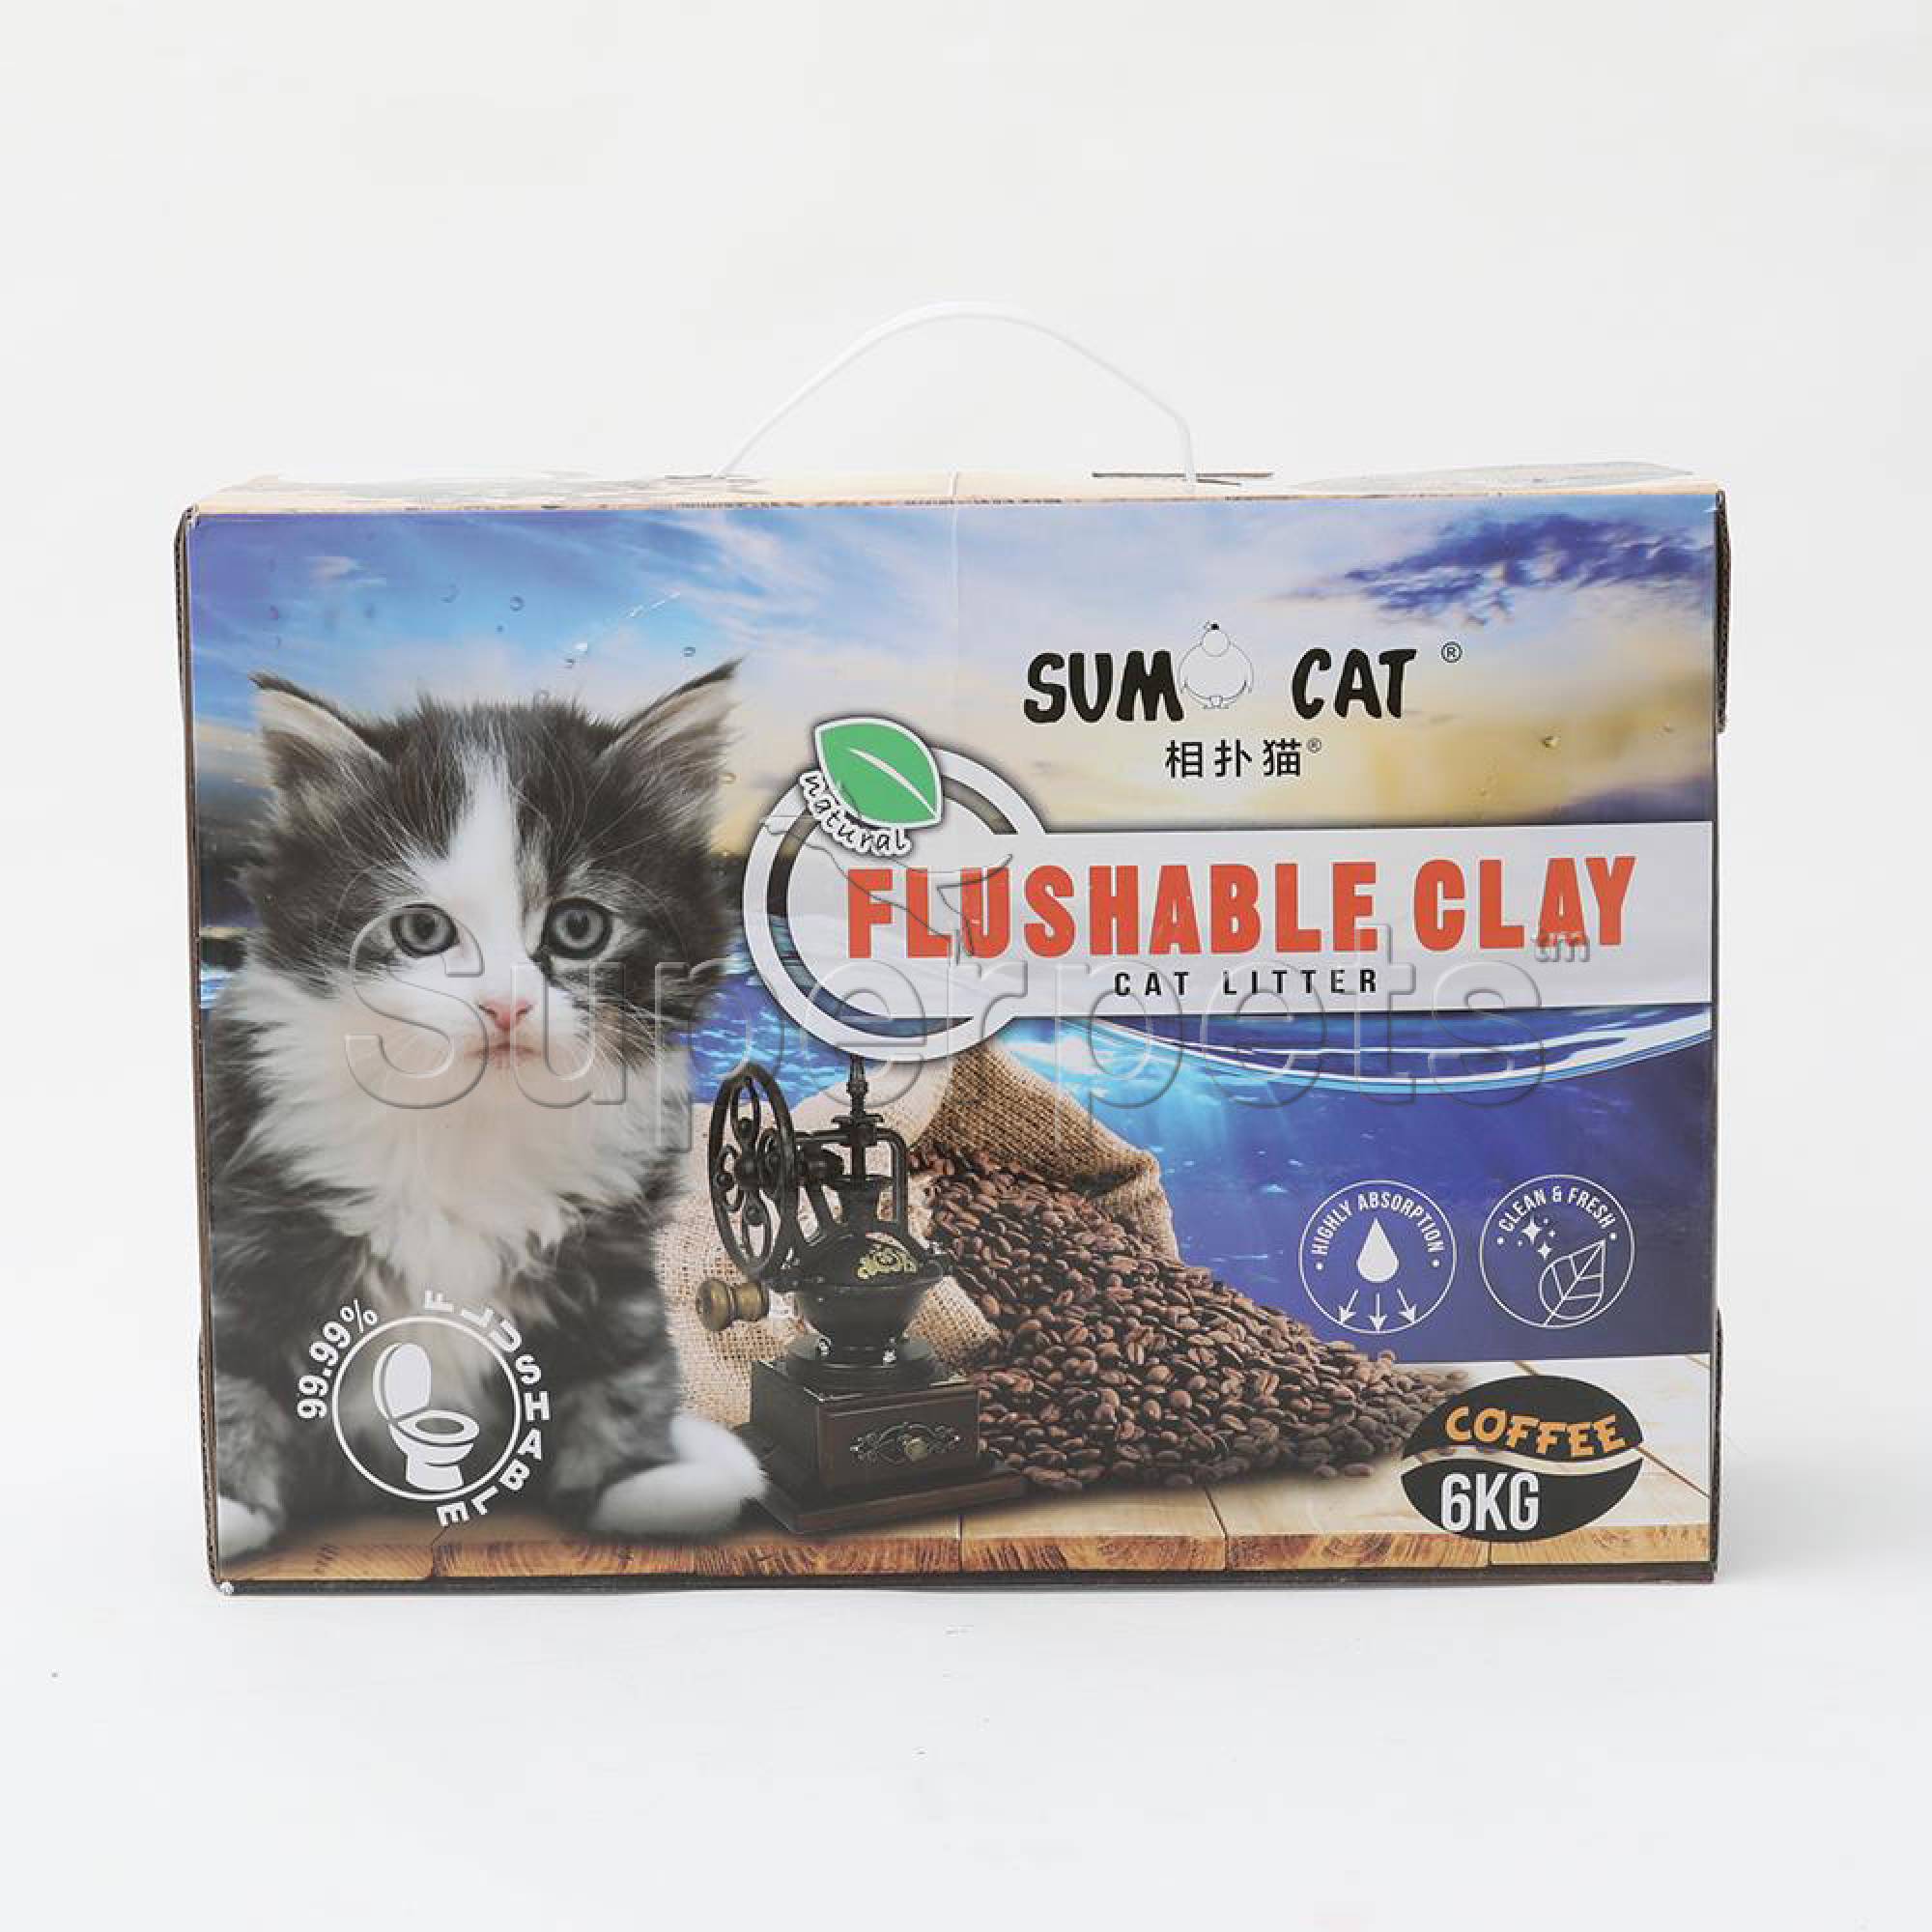 Sumo Cat - Flushable Cat litter - Coffee 6kg (RB142)